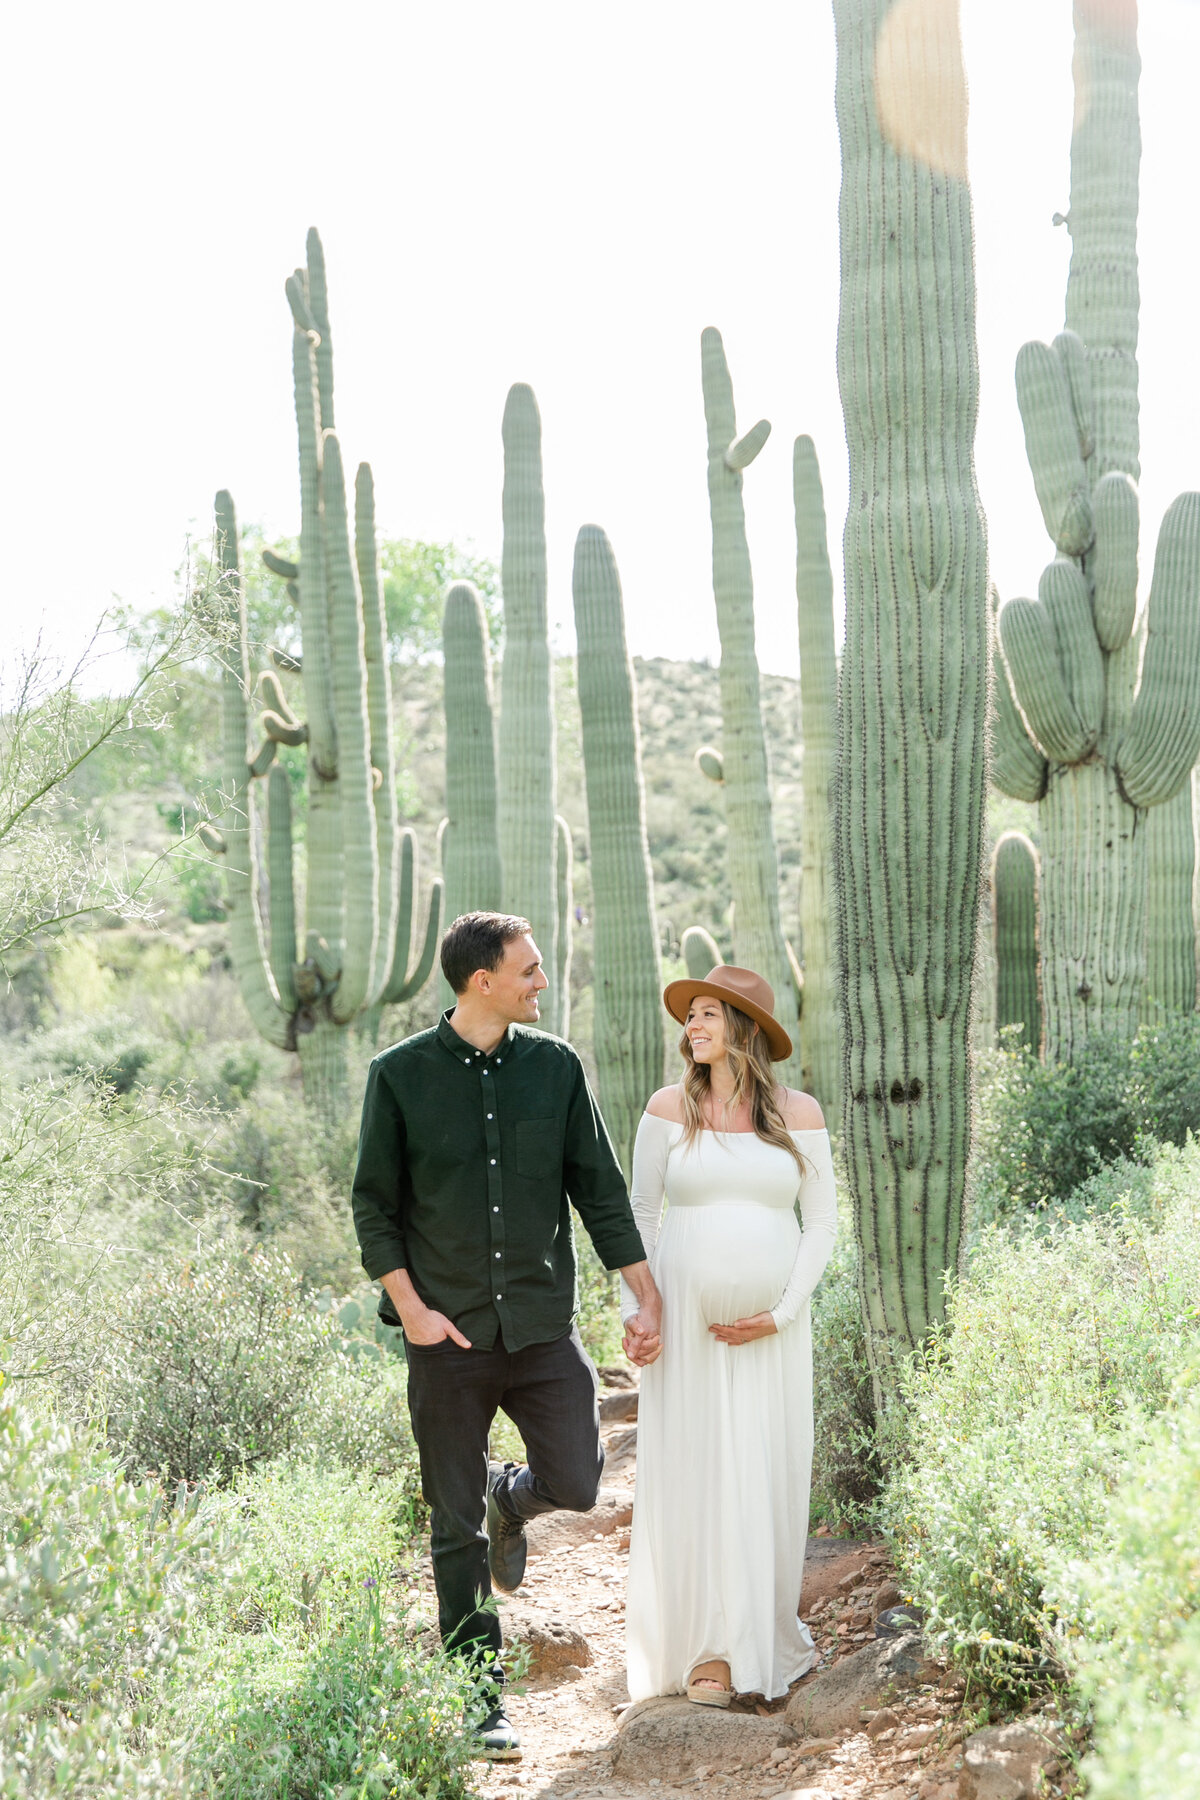 Karlie Colleen Photography - Scottsdale Arizona Maternity Photographer - Kylie & Troy-29